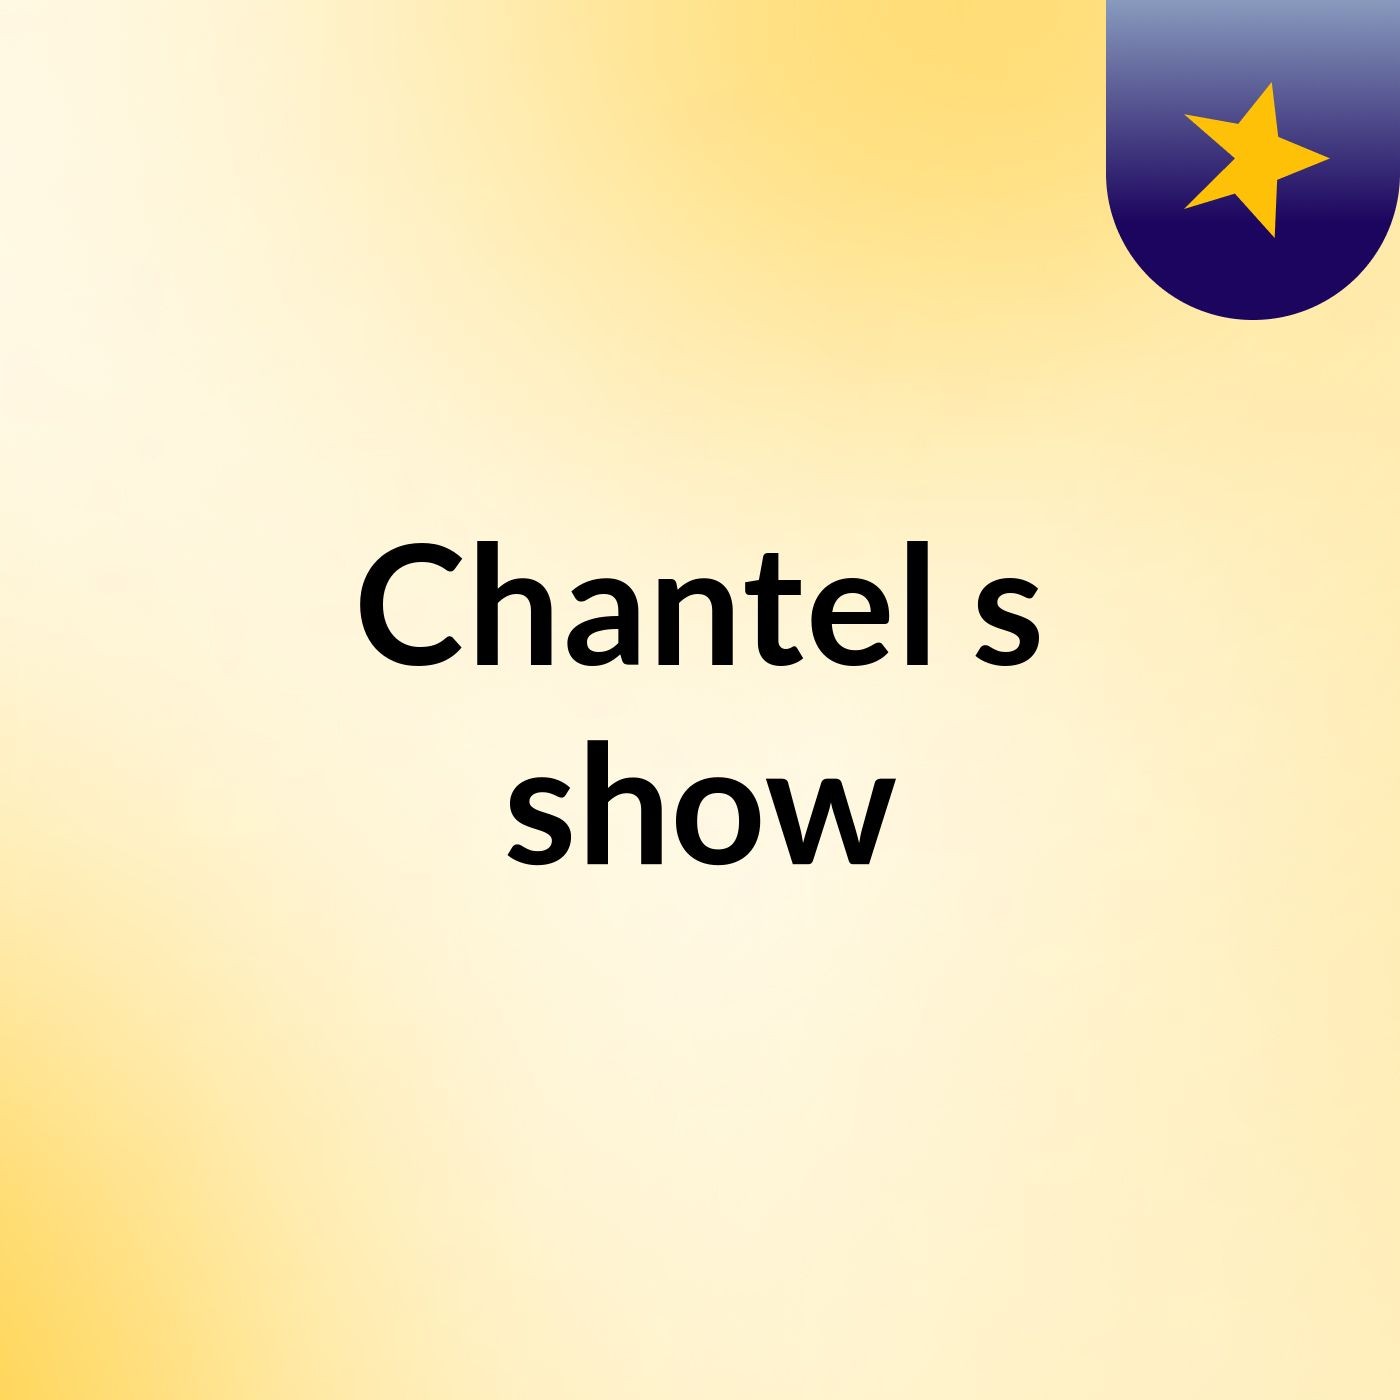 Chantel's show